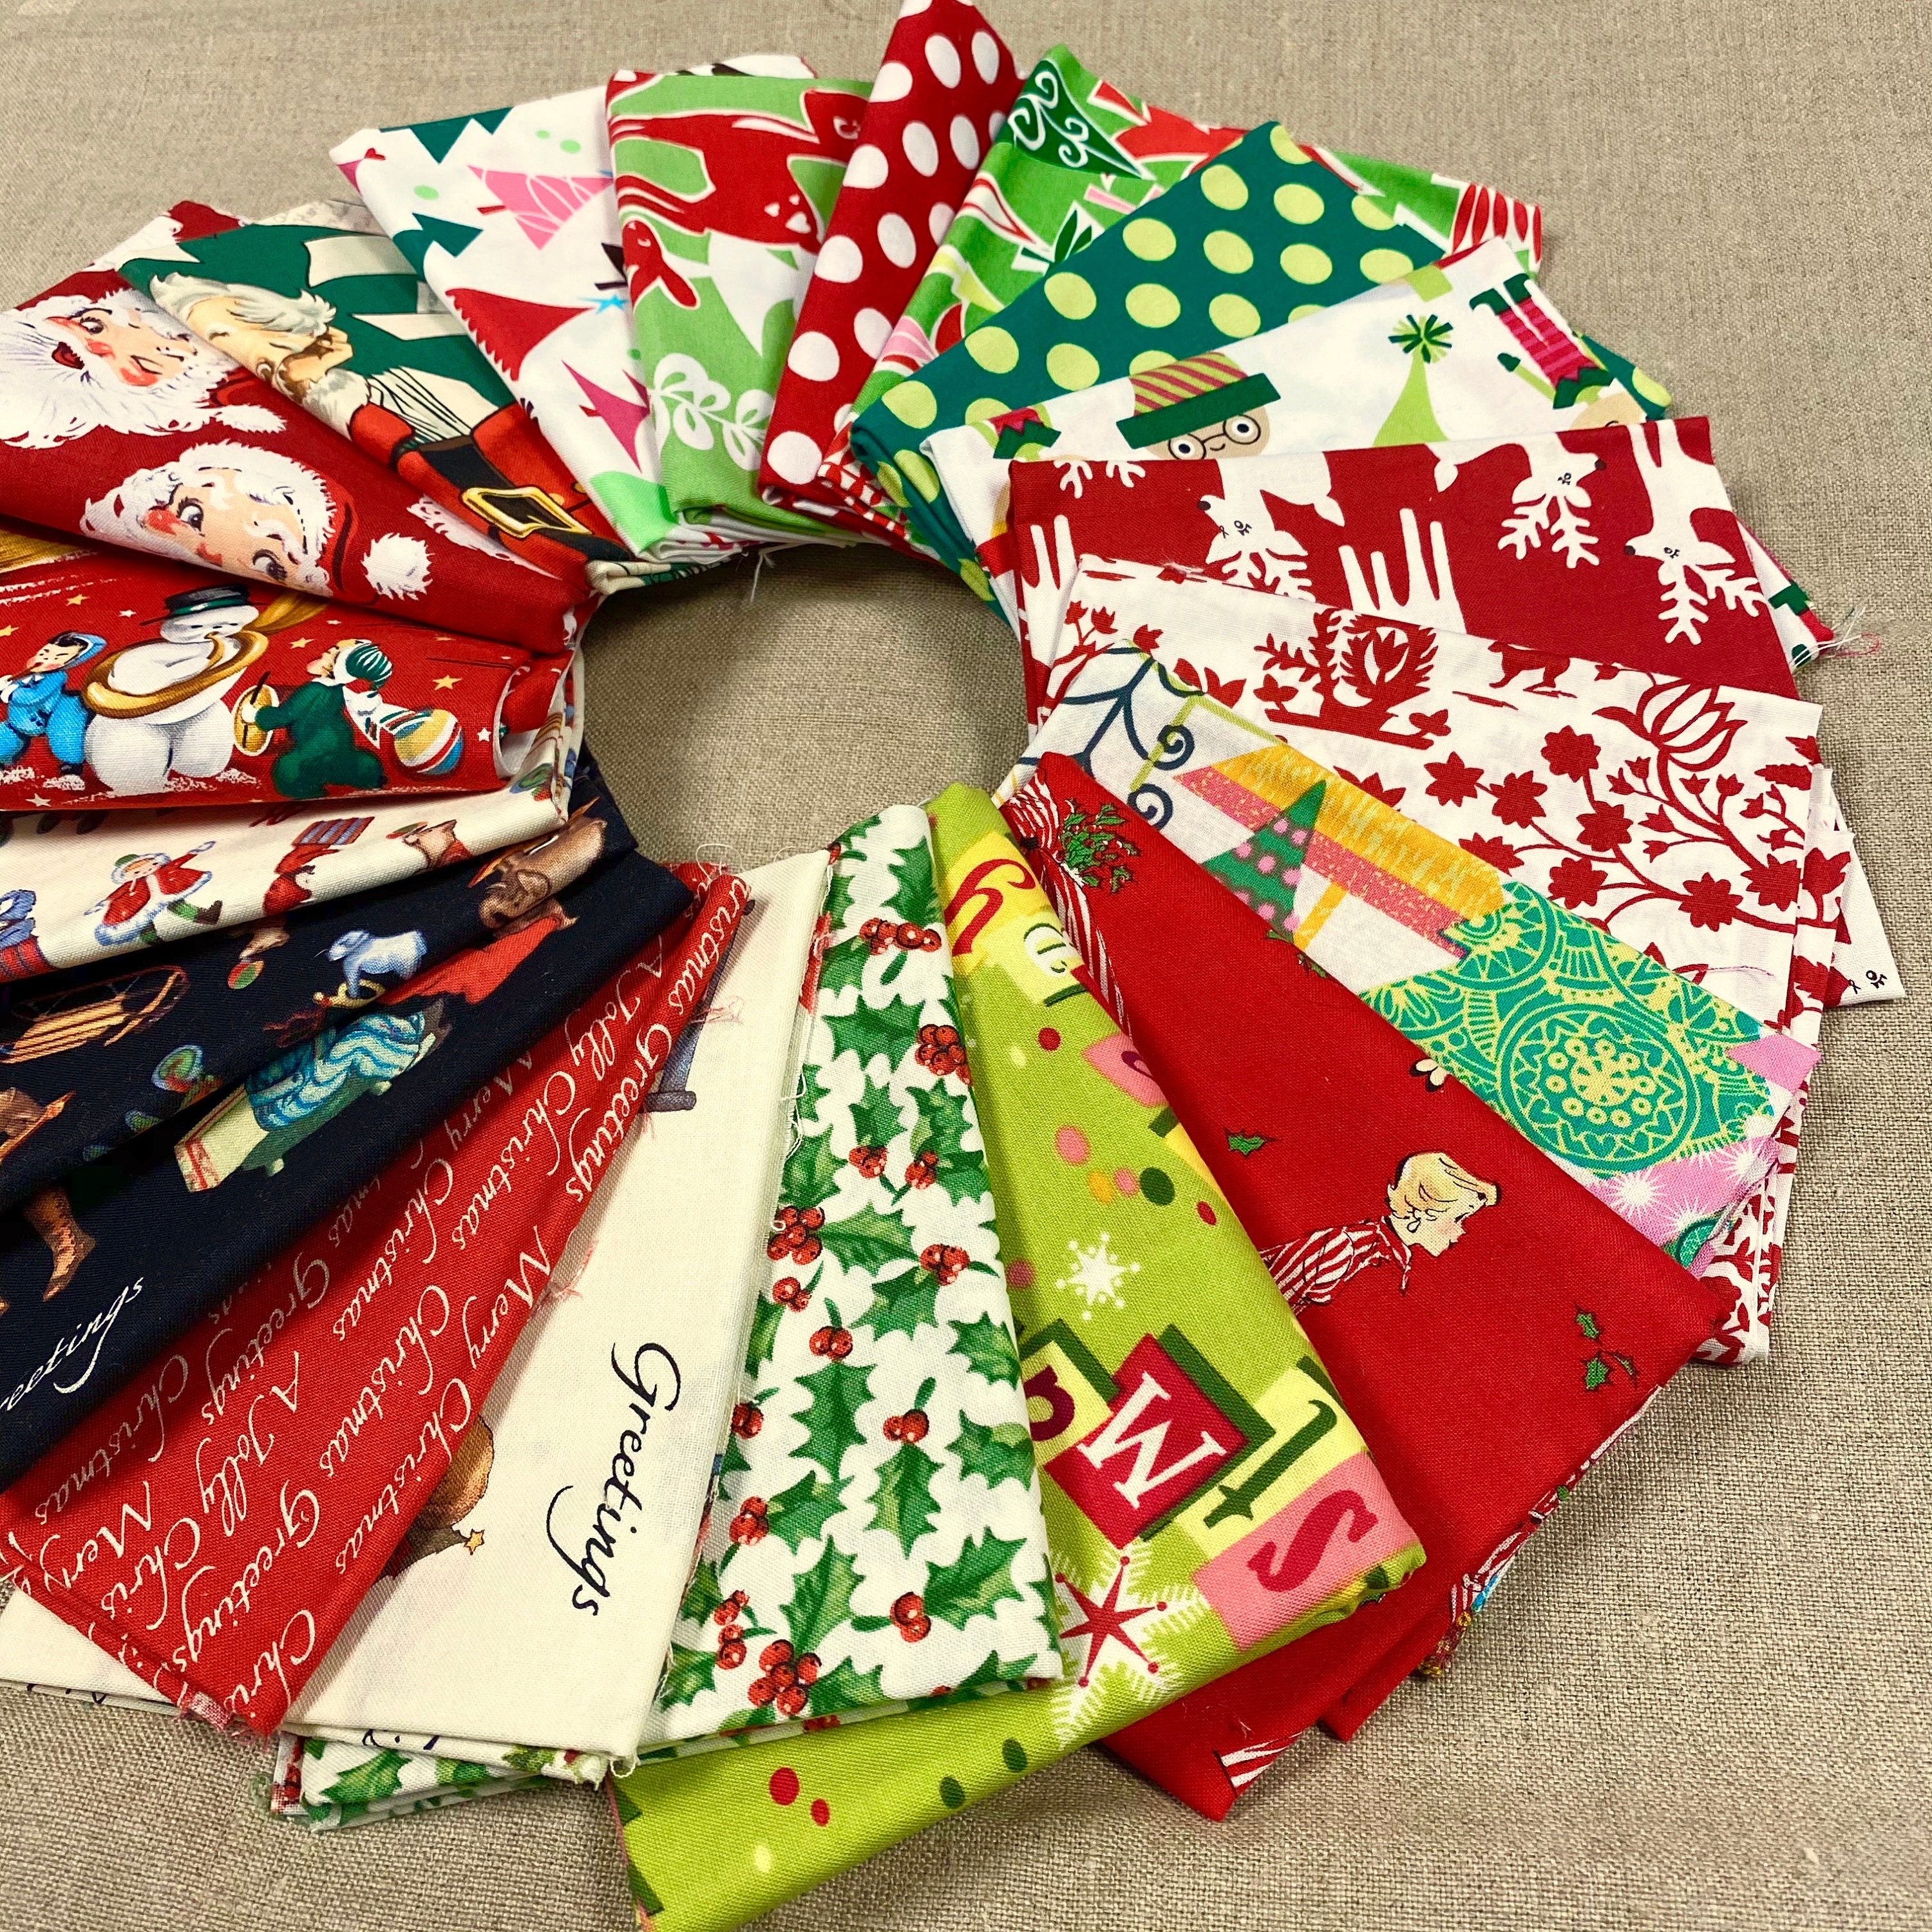 1/2 Pound CHRISTMAS FABRIC SCRAPS Scrap Bag Quilt Fabric Assorted Prints  Wovens - Michael Miller, Alexander Henry, Robert Kaufman Holiday